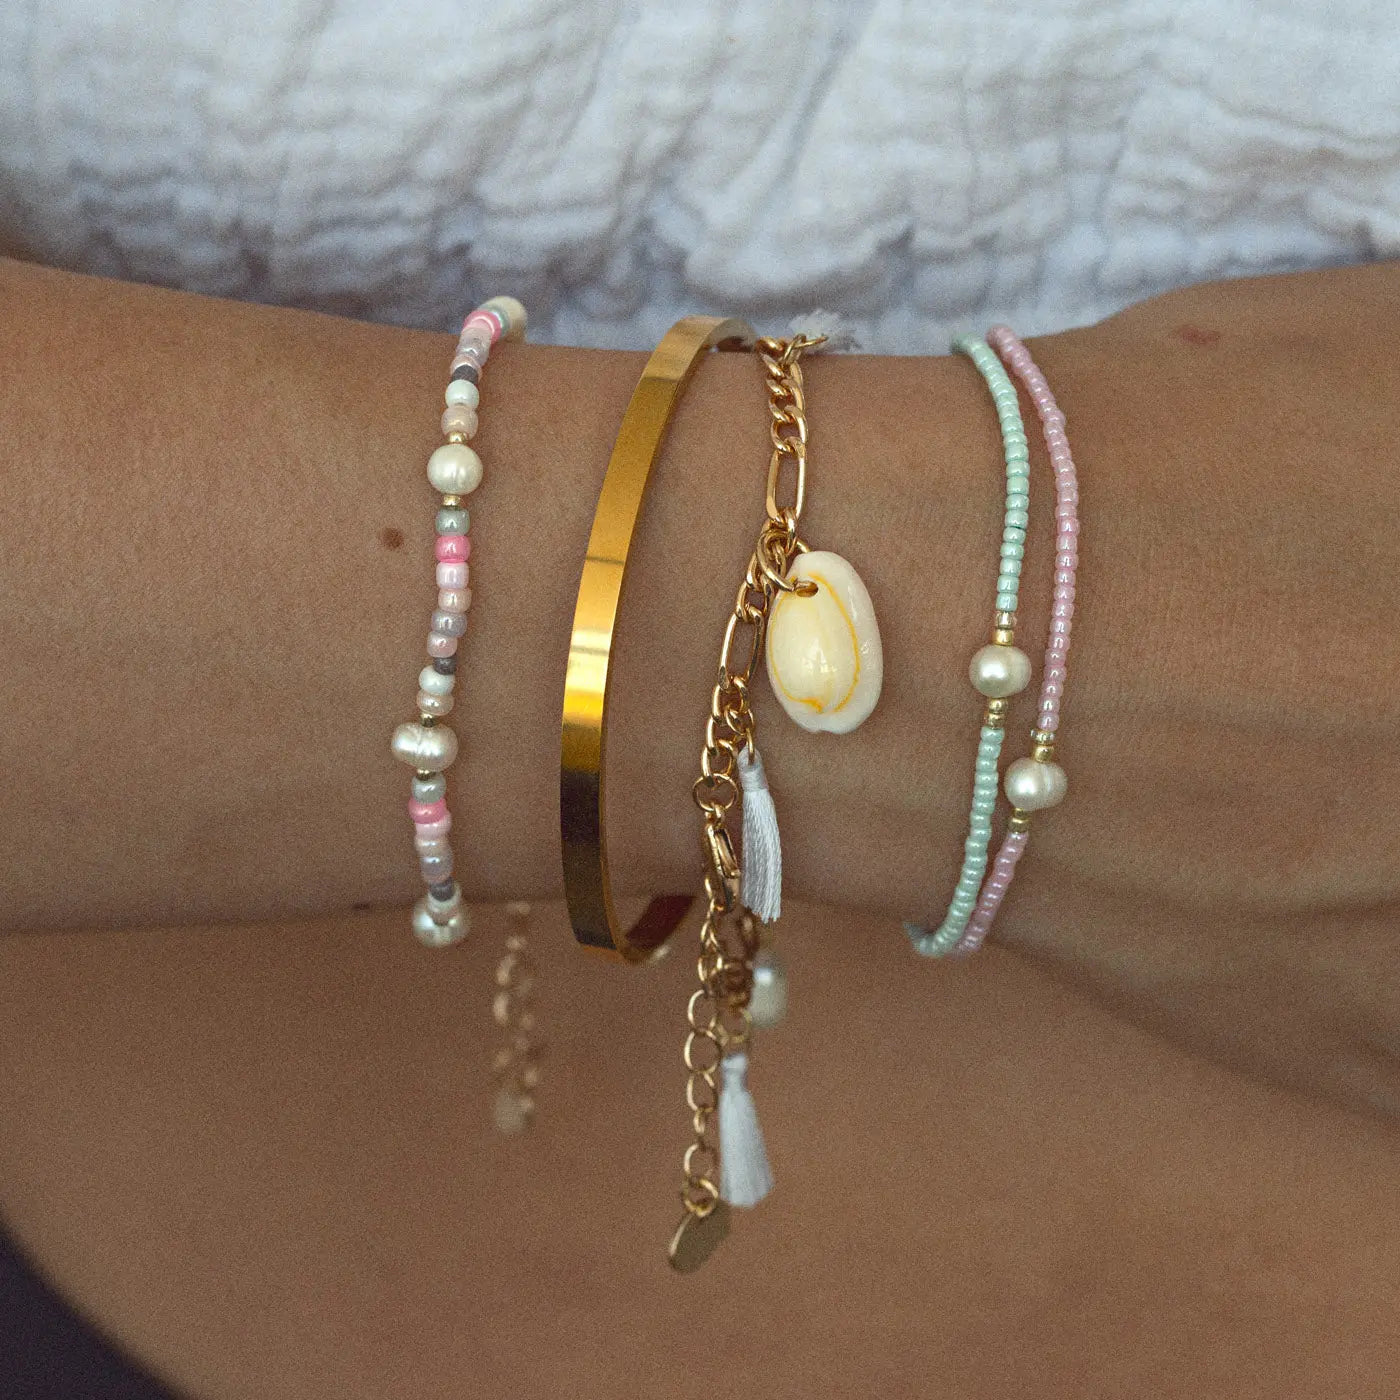 Alba - Perle mit Perlen-Makramee-Armband